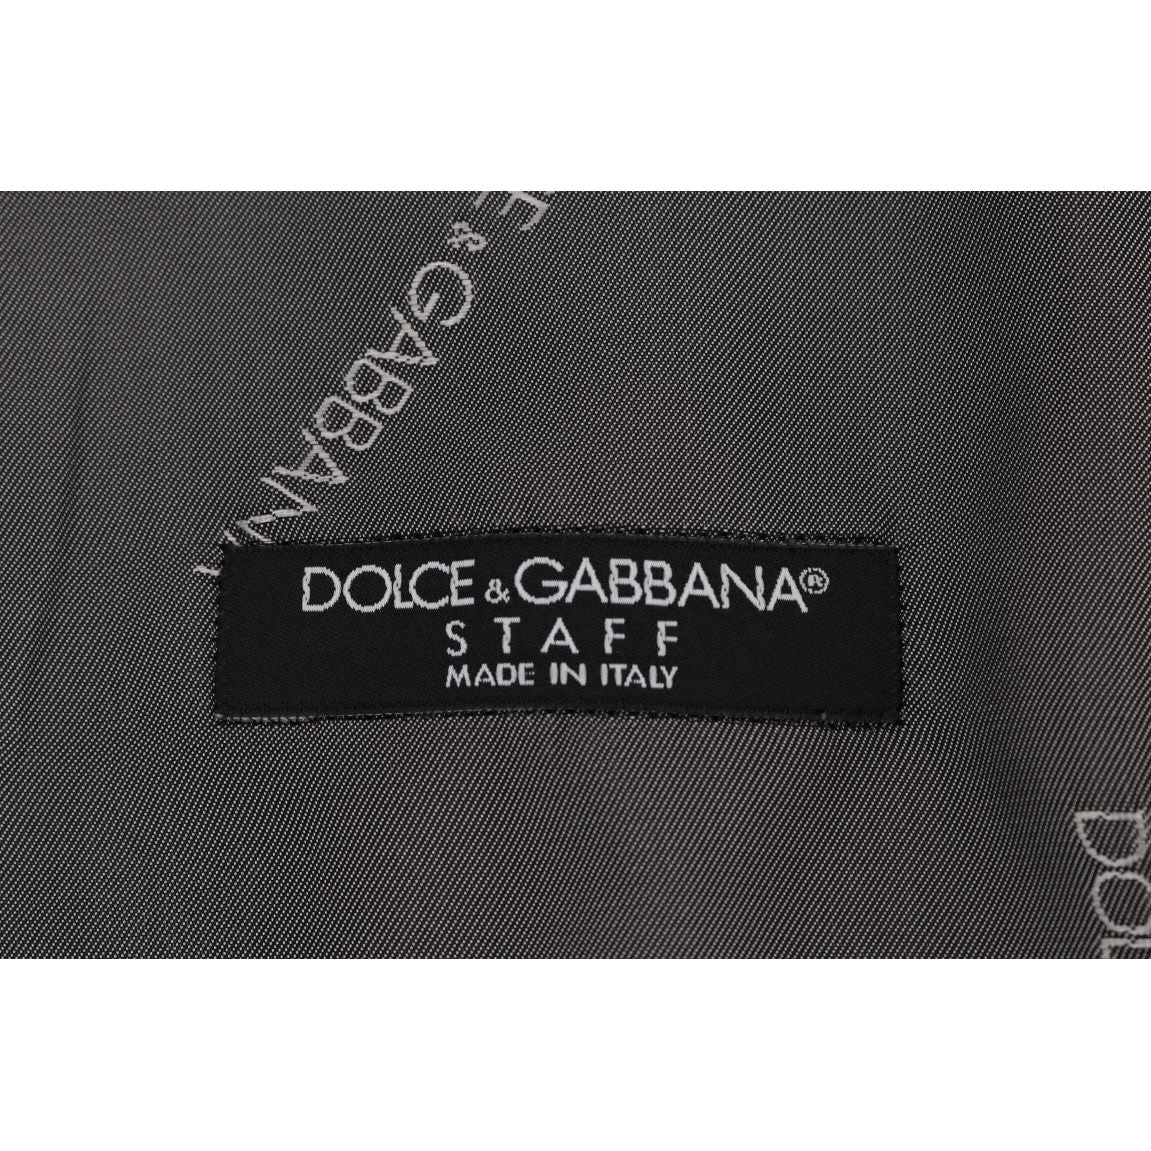 Dolce & Gabbana Elegant Gray Waistcoat Vest gray-staff-cotton-rayon-vest-1 498533-gray-staff-cotton-rayon-vest-2-5.jpg